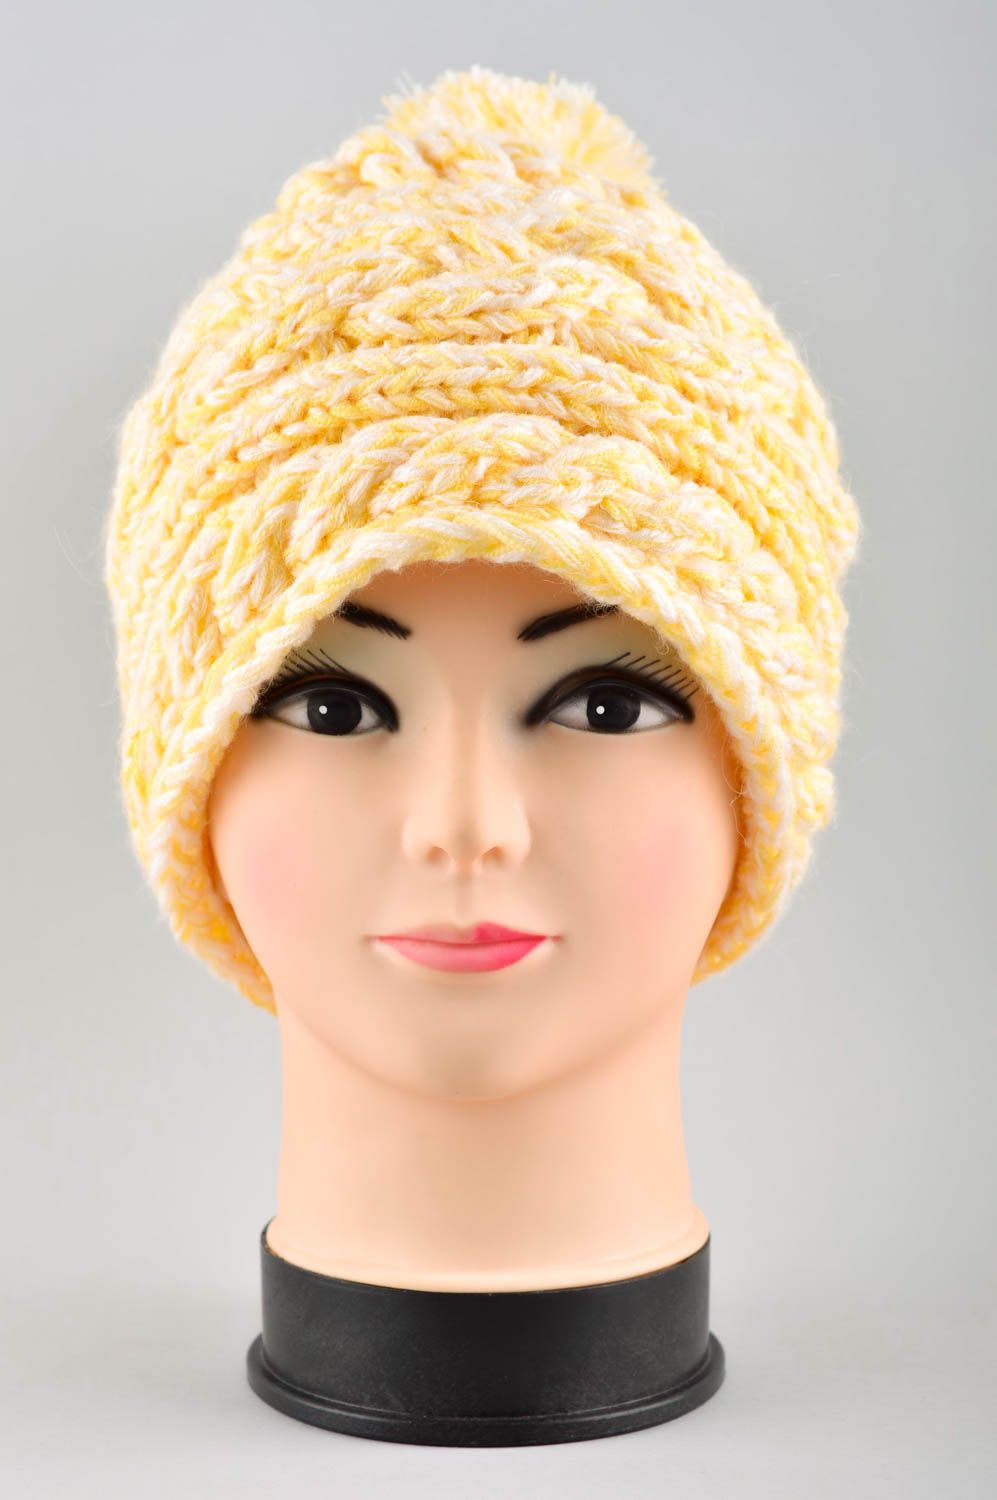 Handmade knitted cap beautiful bright hat warm winter headwear cute cap photo 2